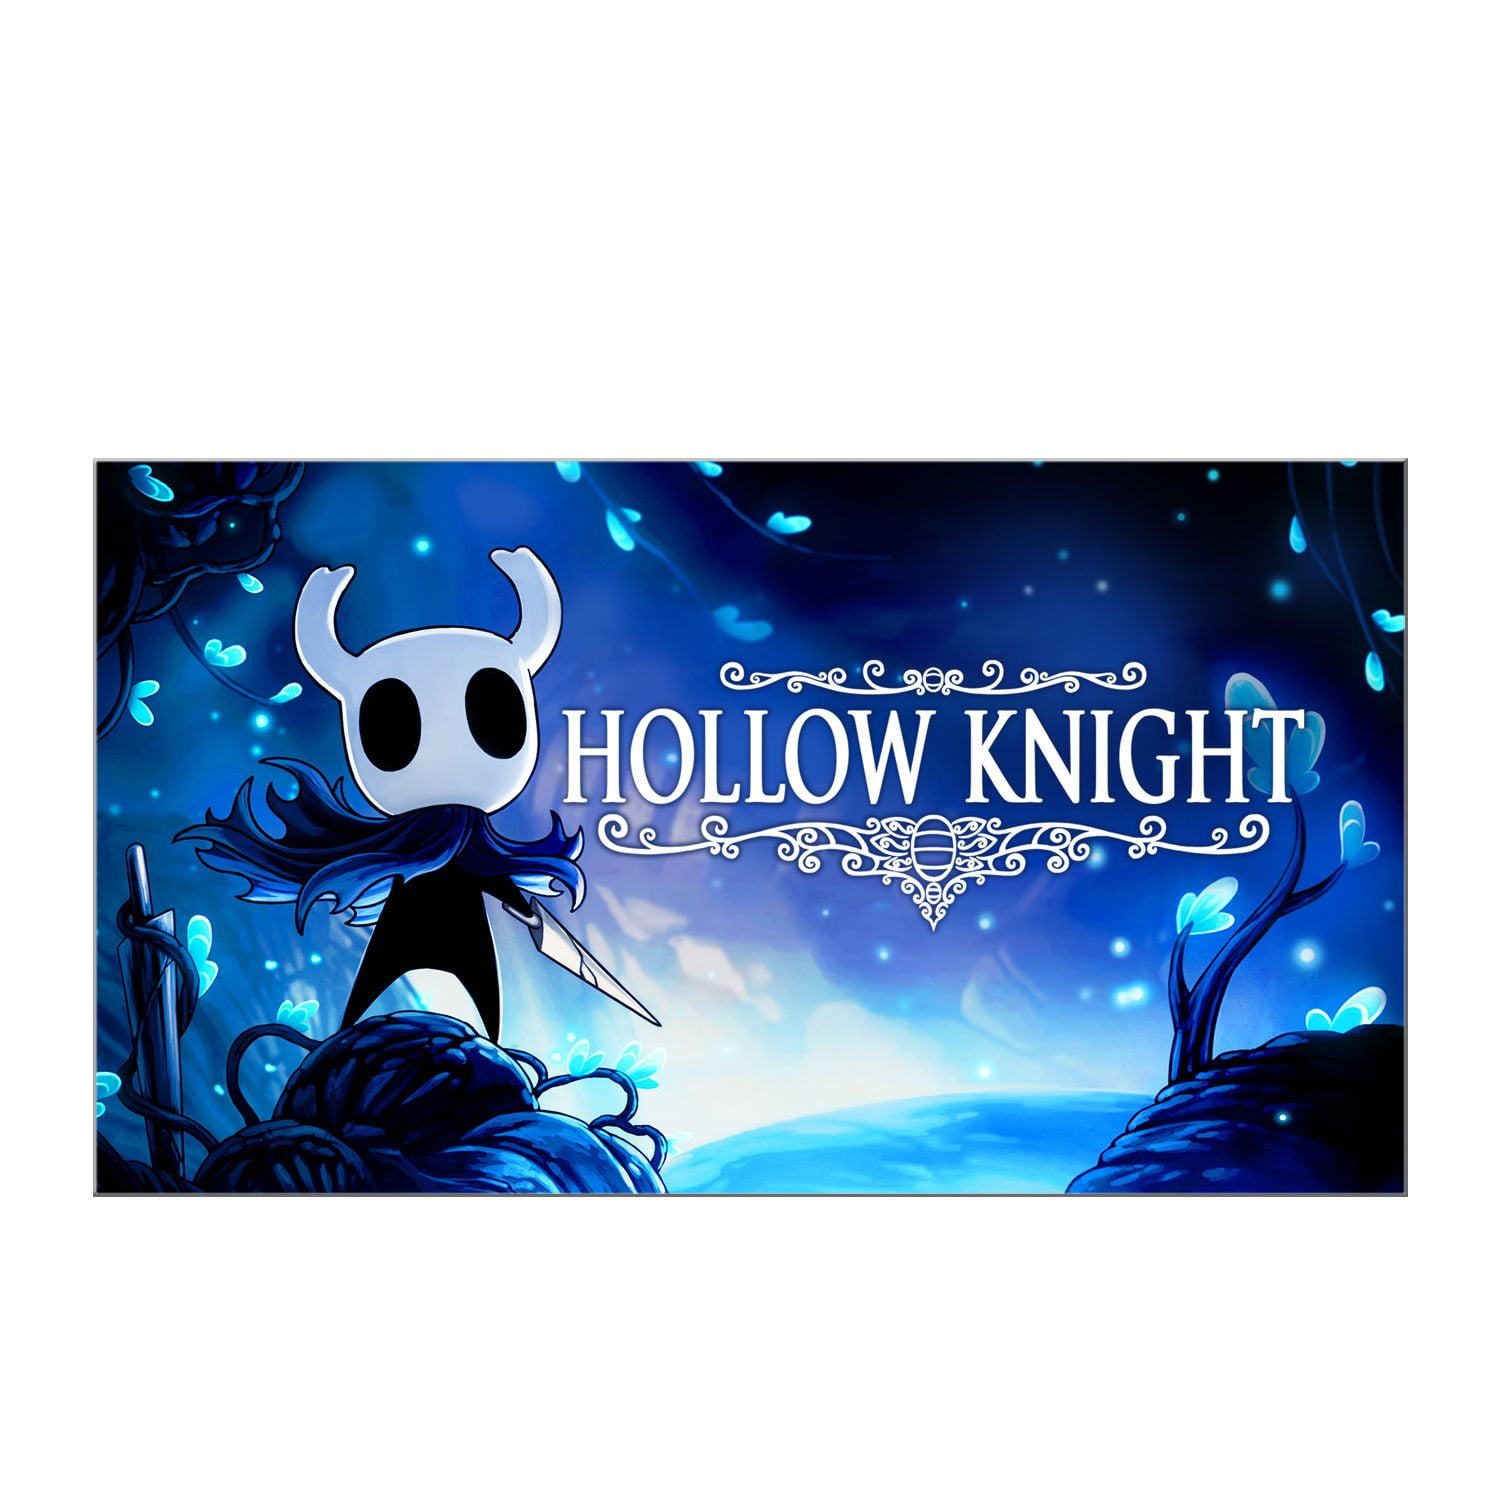 hollow knight nintendo 3ds